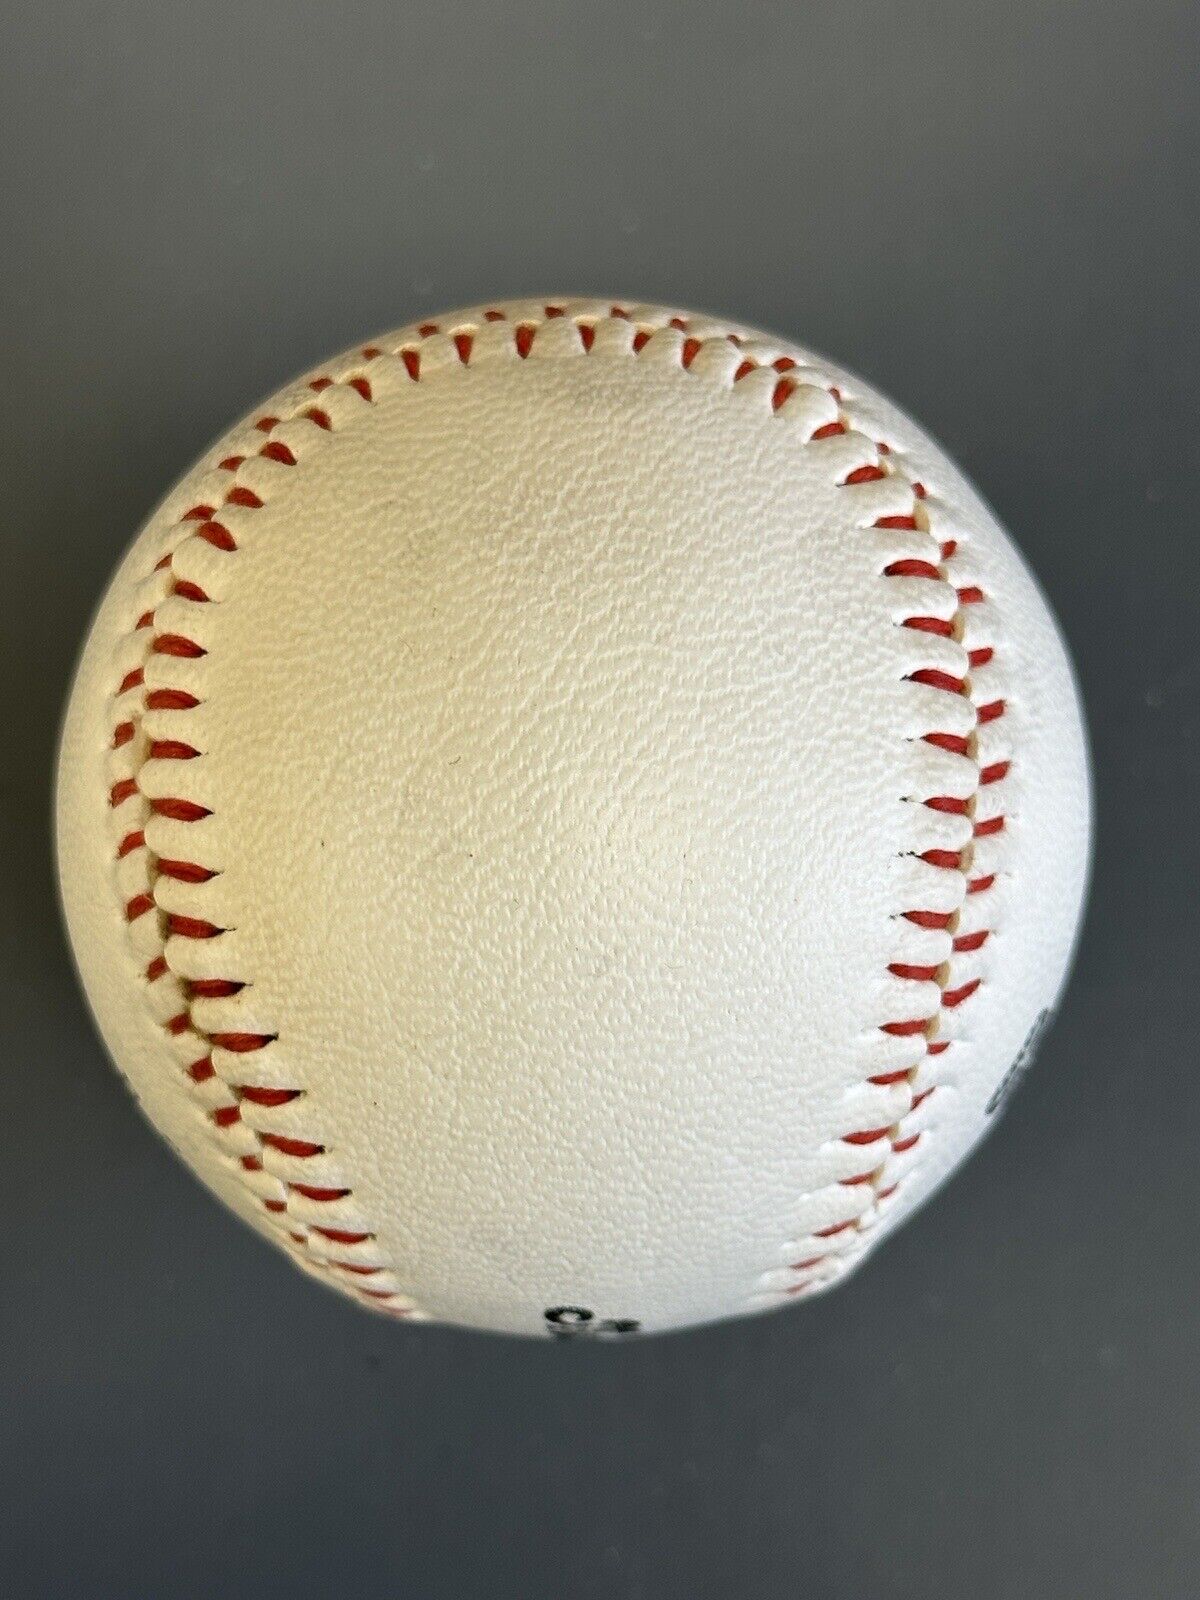 Ralph Kiner Chicago Cubs Pittsburgh Pirates HOFer SIGNED Baseball w/ hologram